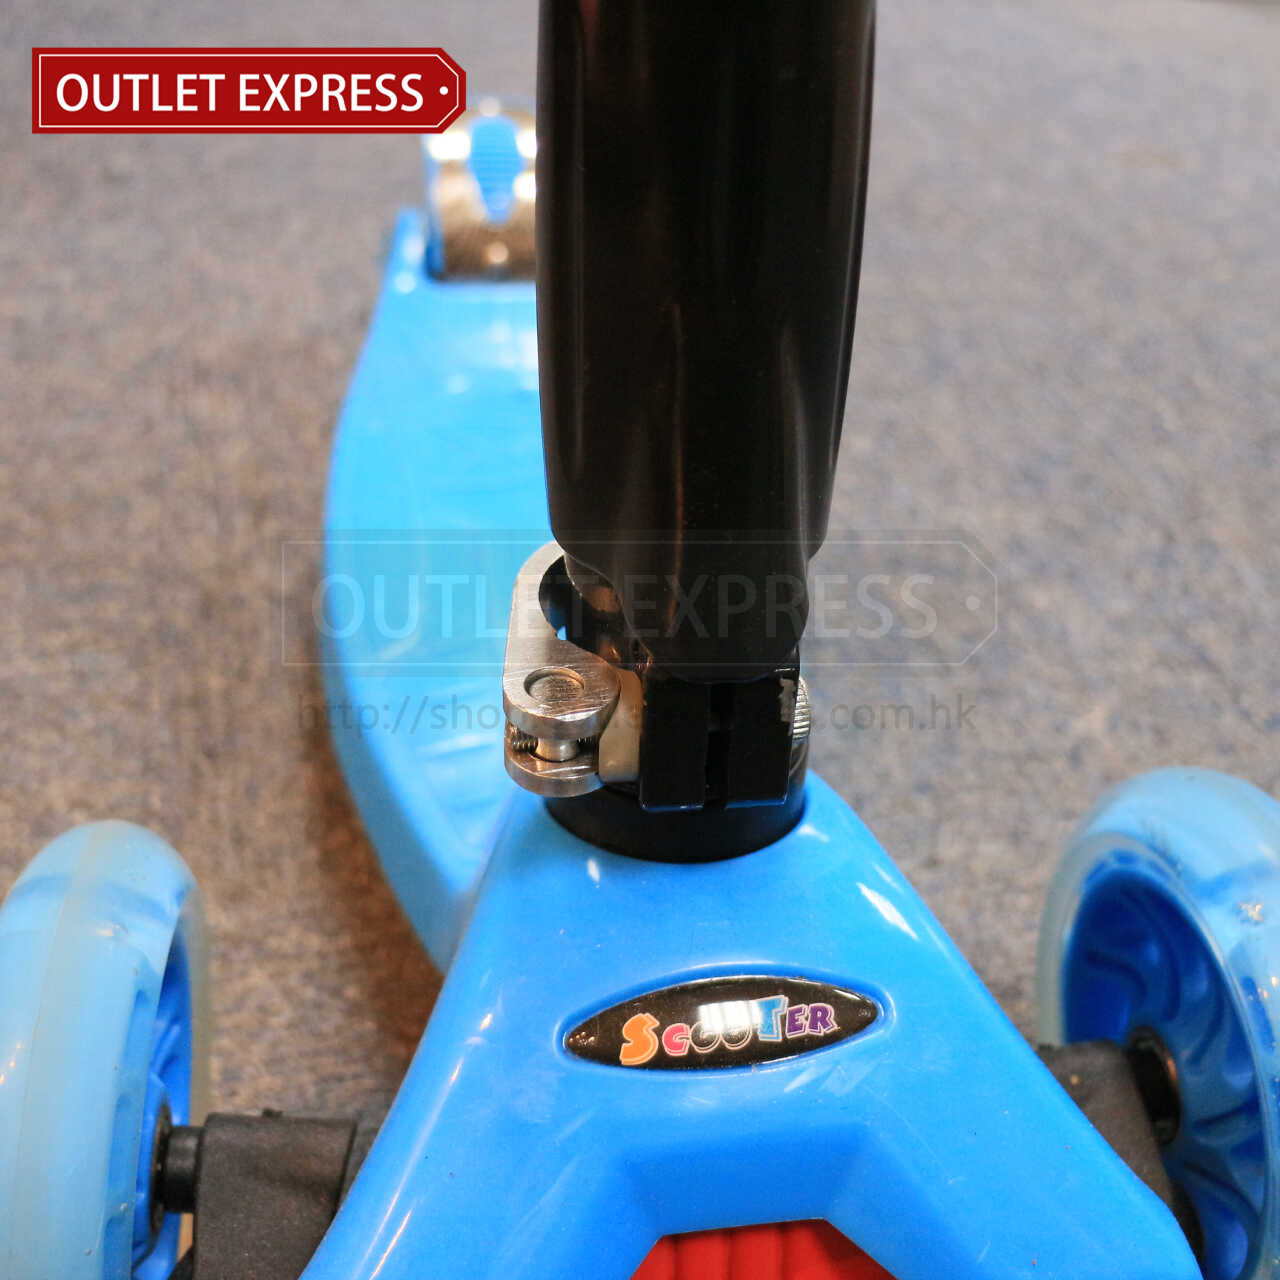 ScooTer 4輪閃光可摺疊兒童滑板車  - Outlet Express HK生活百貨城實拍相片